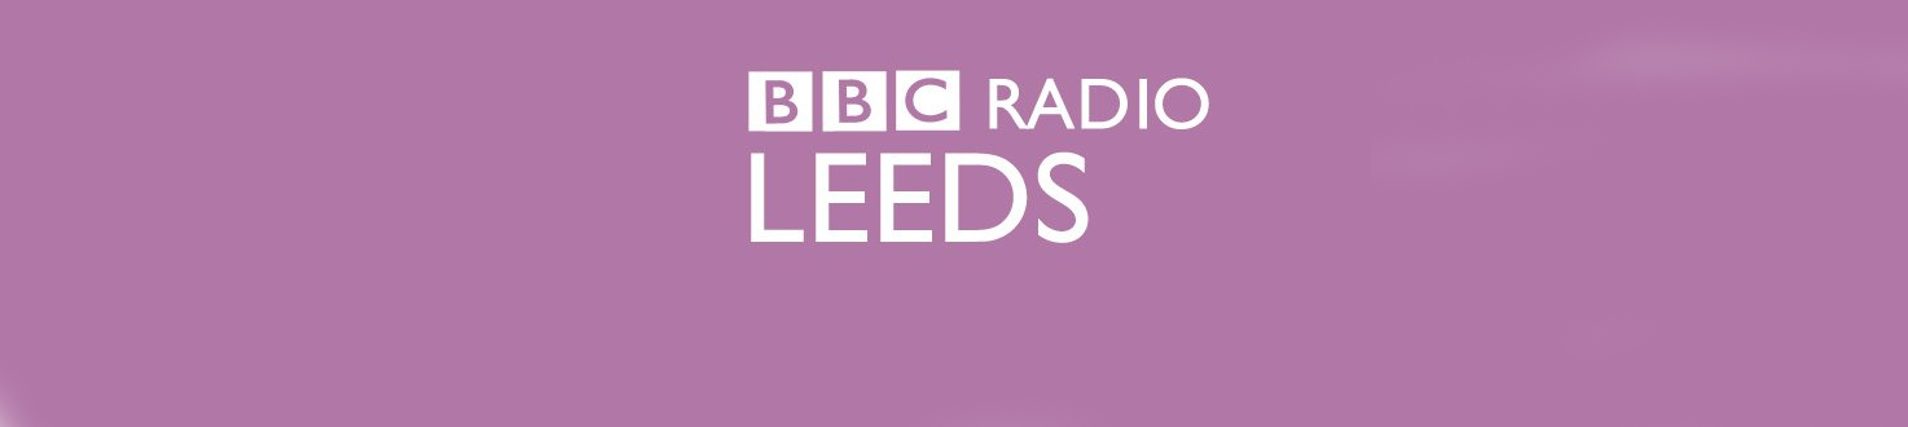 BBC-Radio-Leeds